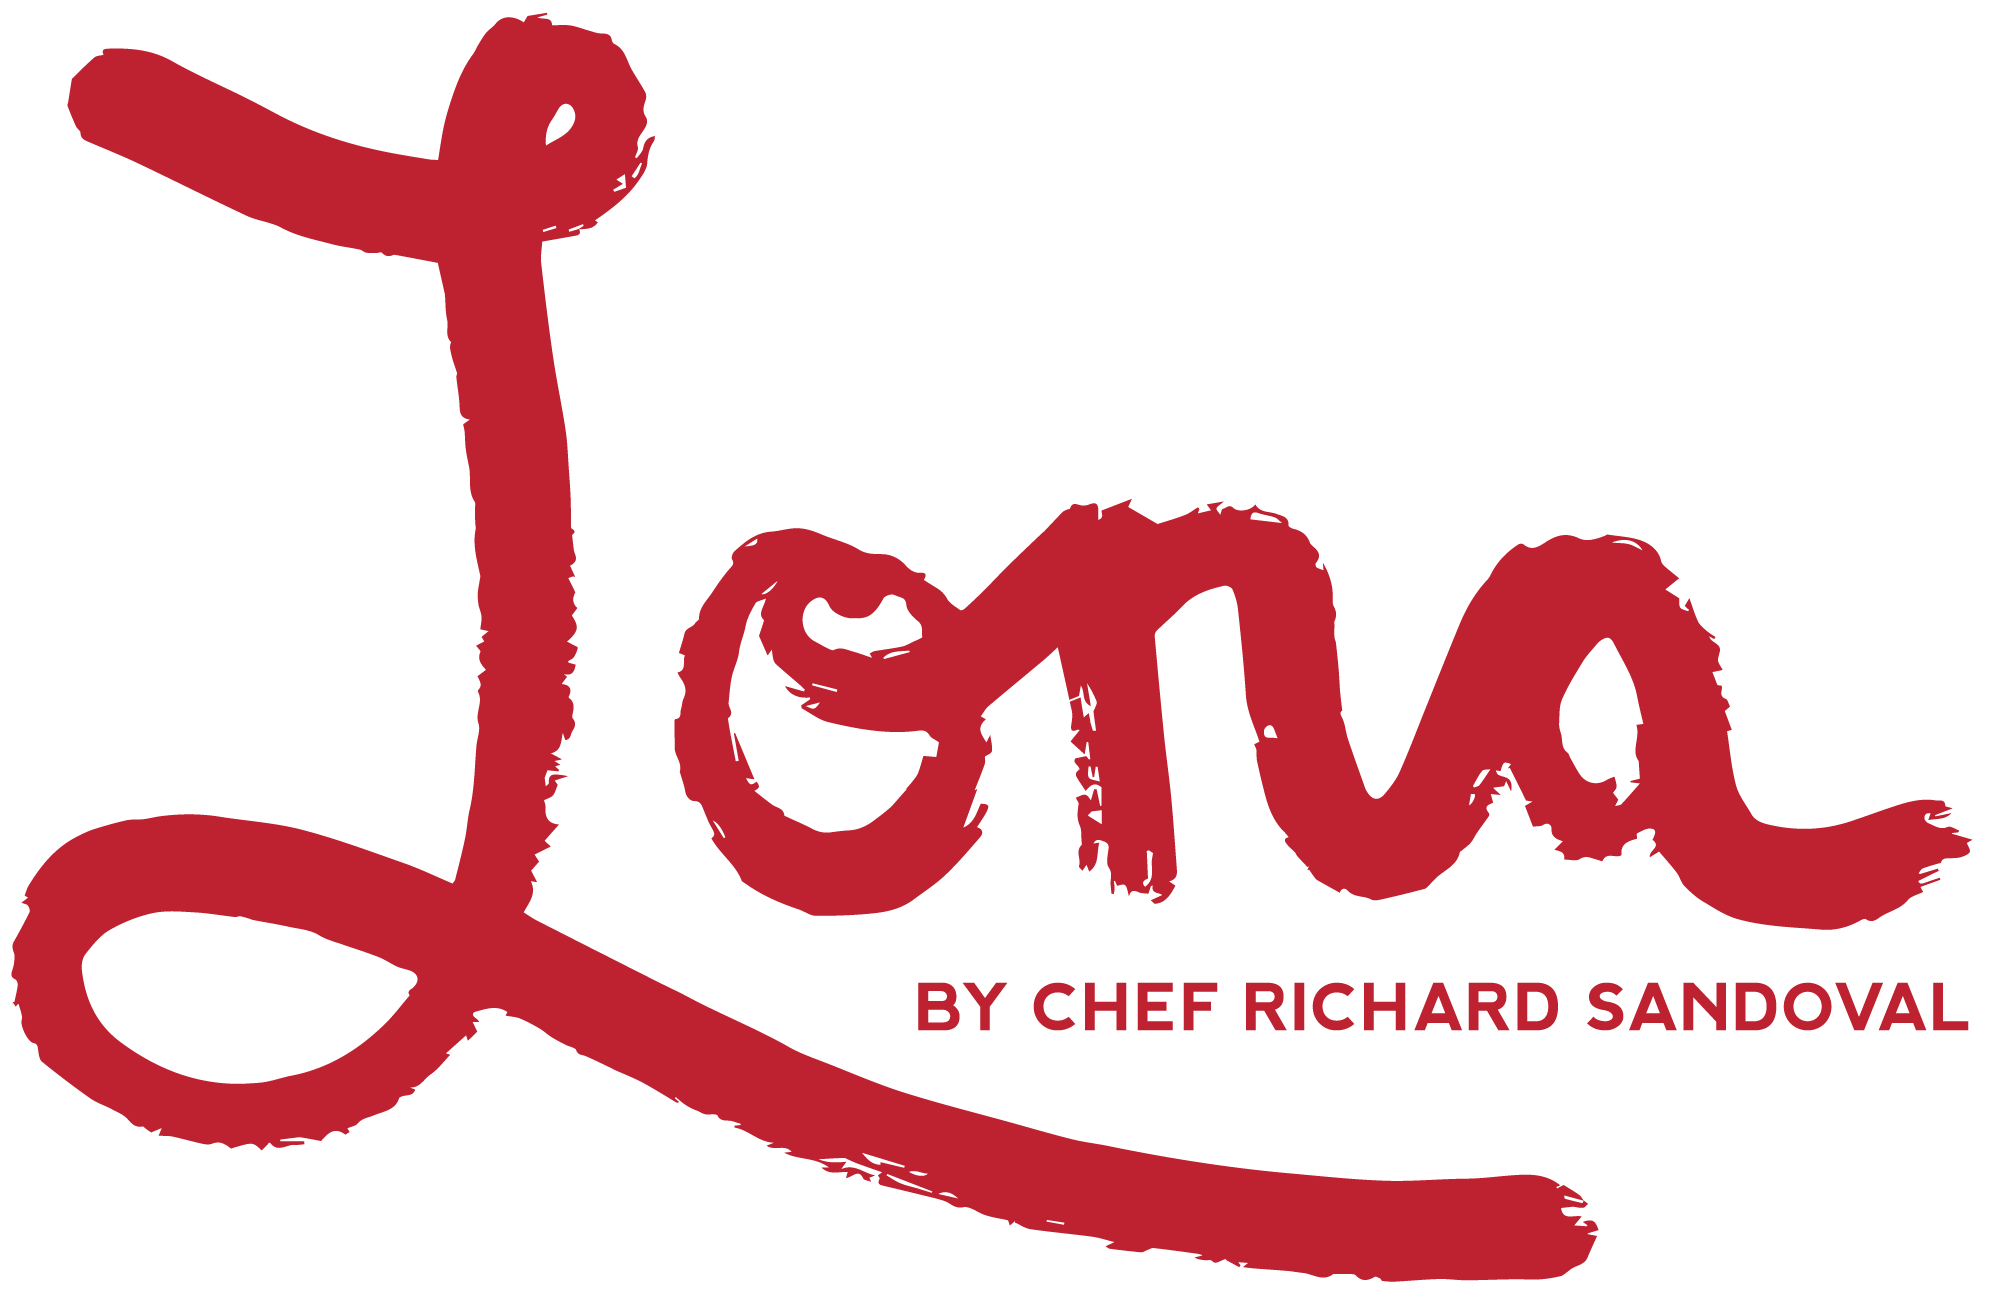 Lona by Chef Richard Sandoval